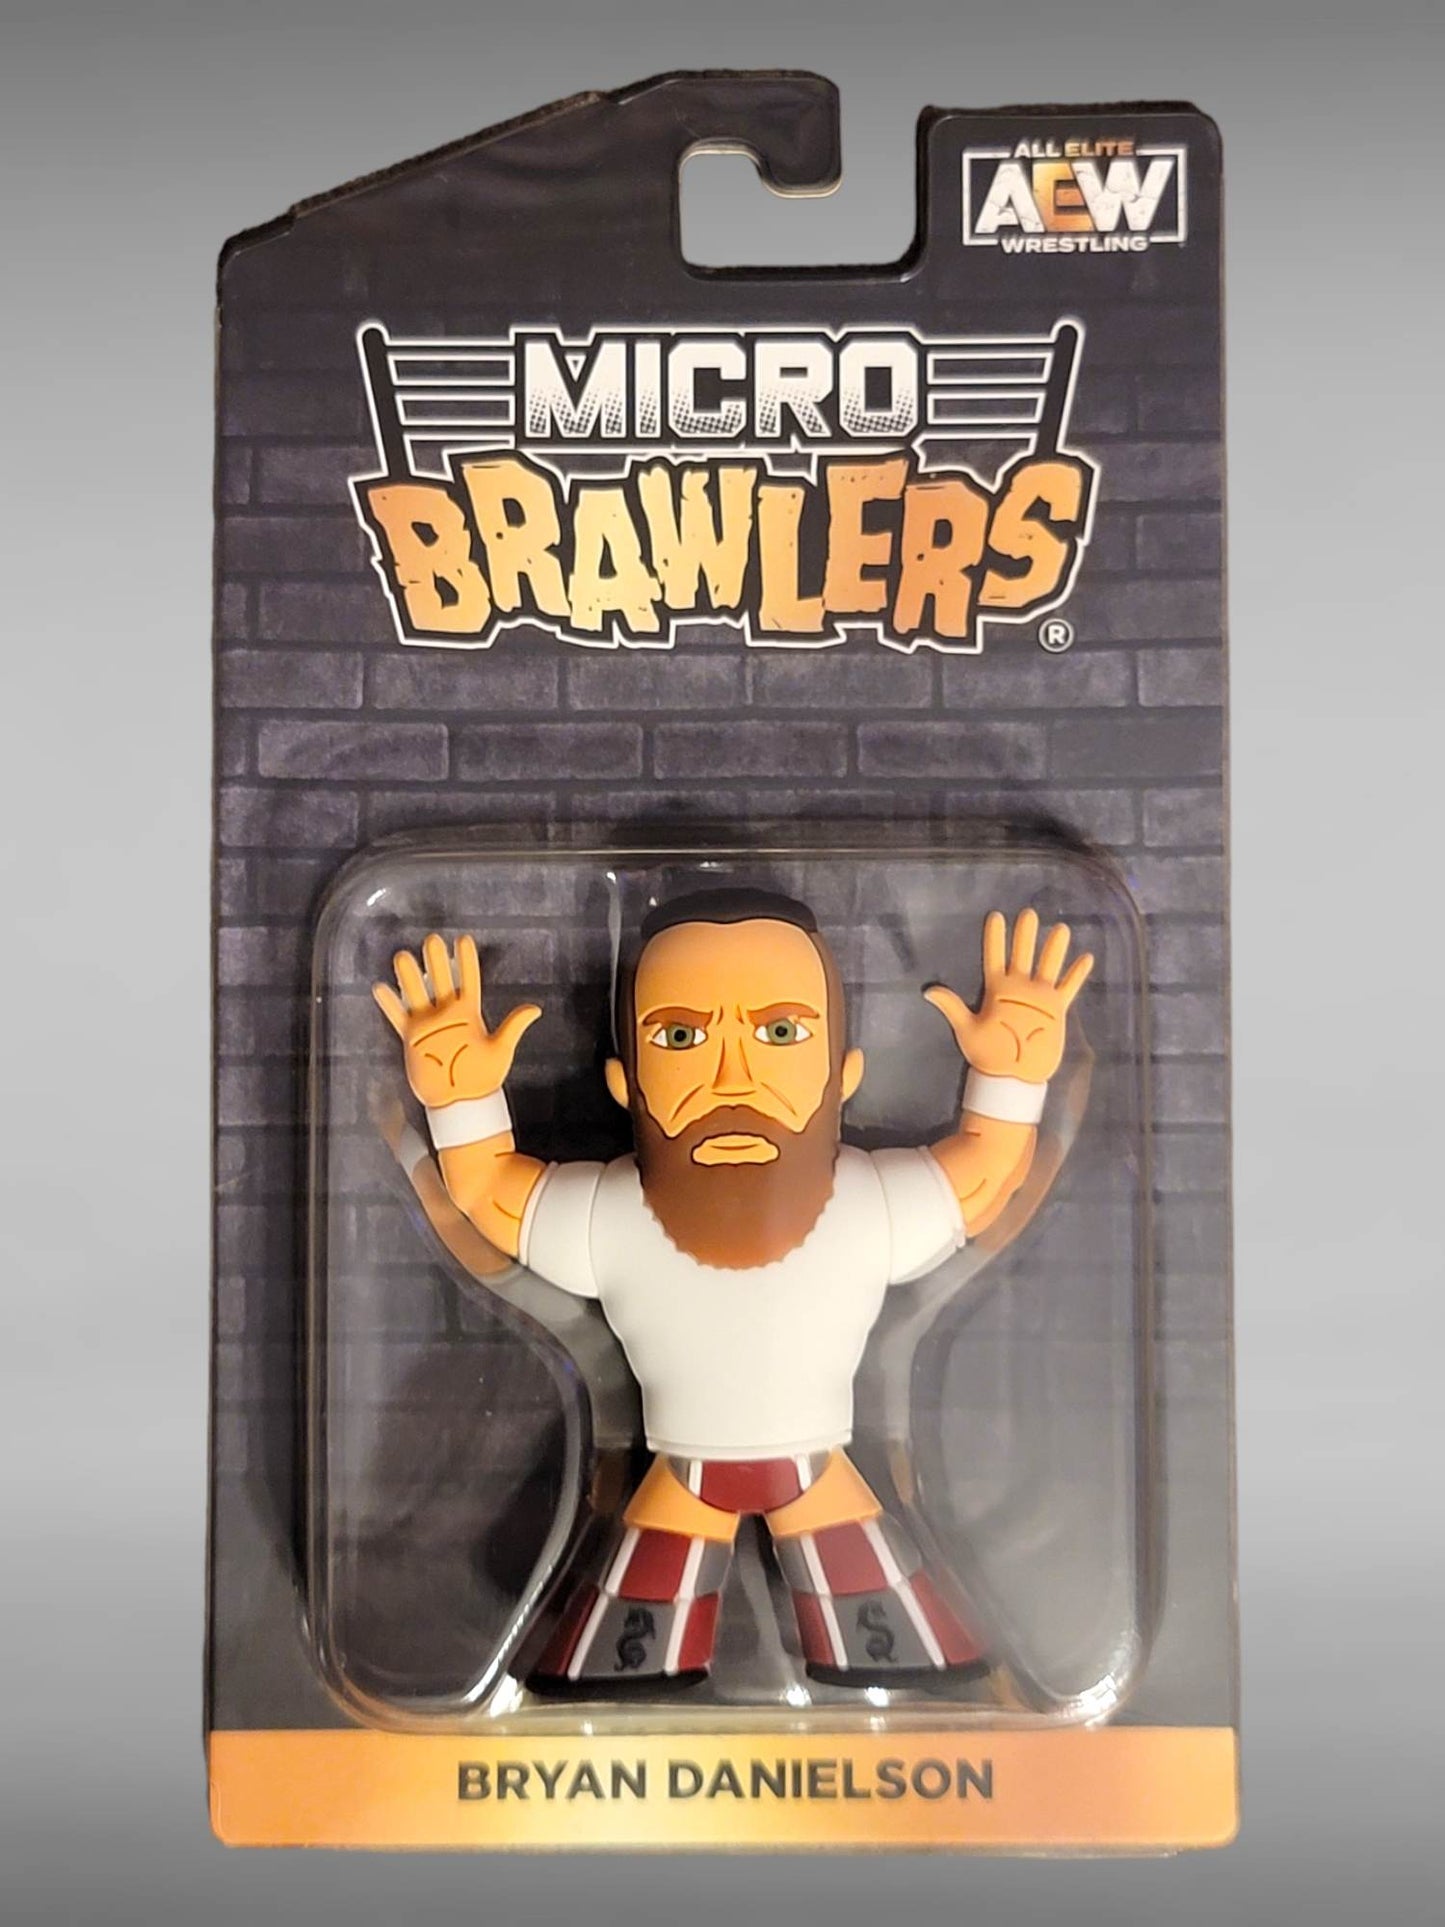 Pro Wrestling Tees on X: On sale now! @AEW Micro Brawler Minis